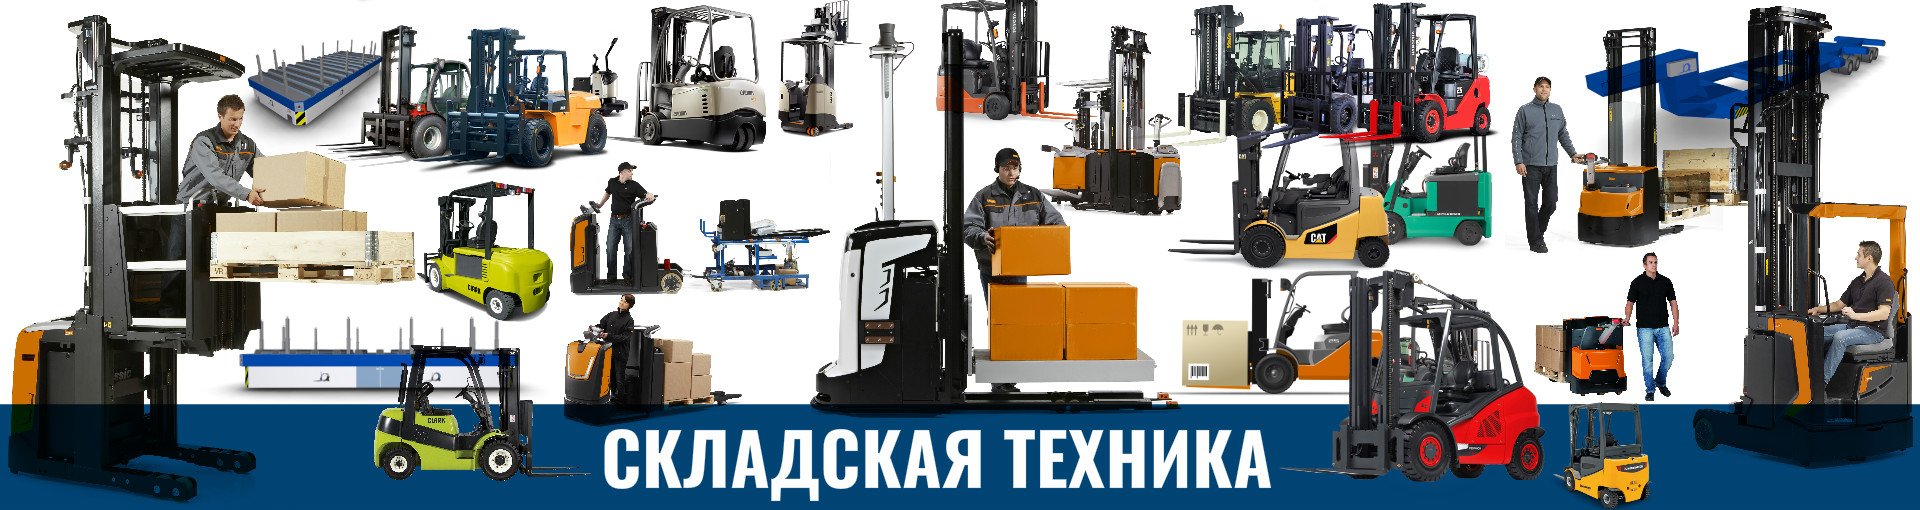 Складская техника - продажа складской техники в России